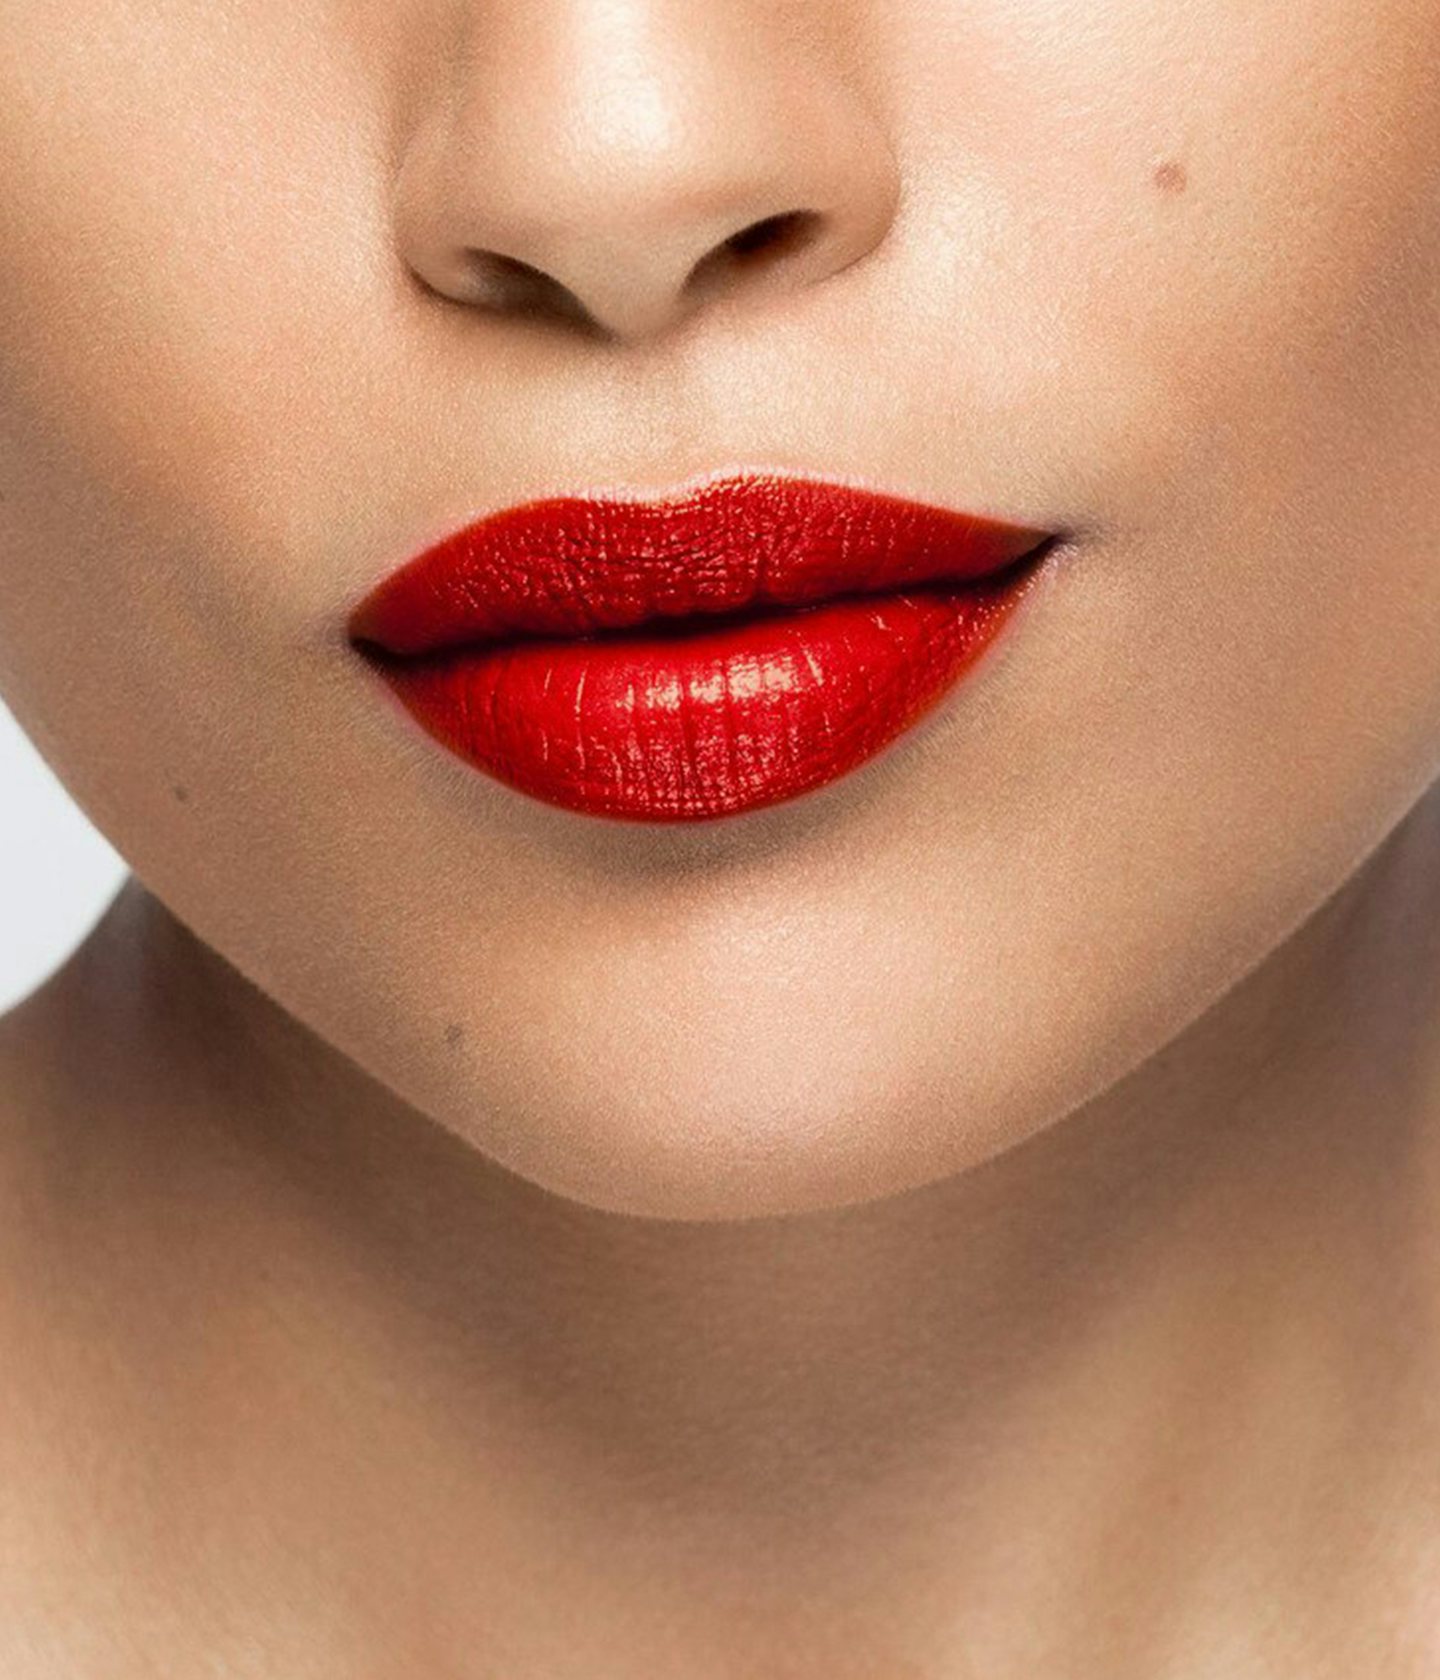 La bouche rouge Le Doré lipstick shade on the lips of a medium skin model